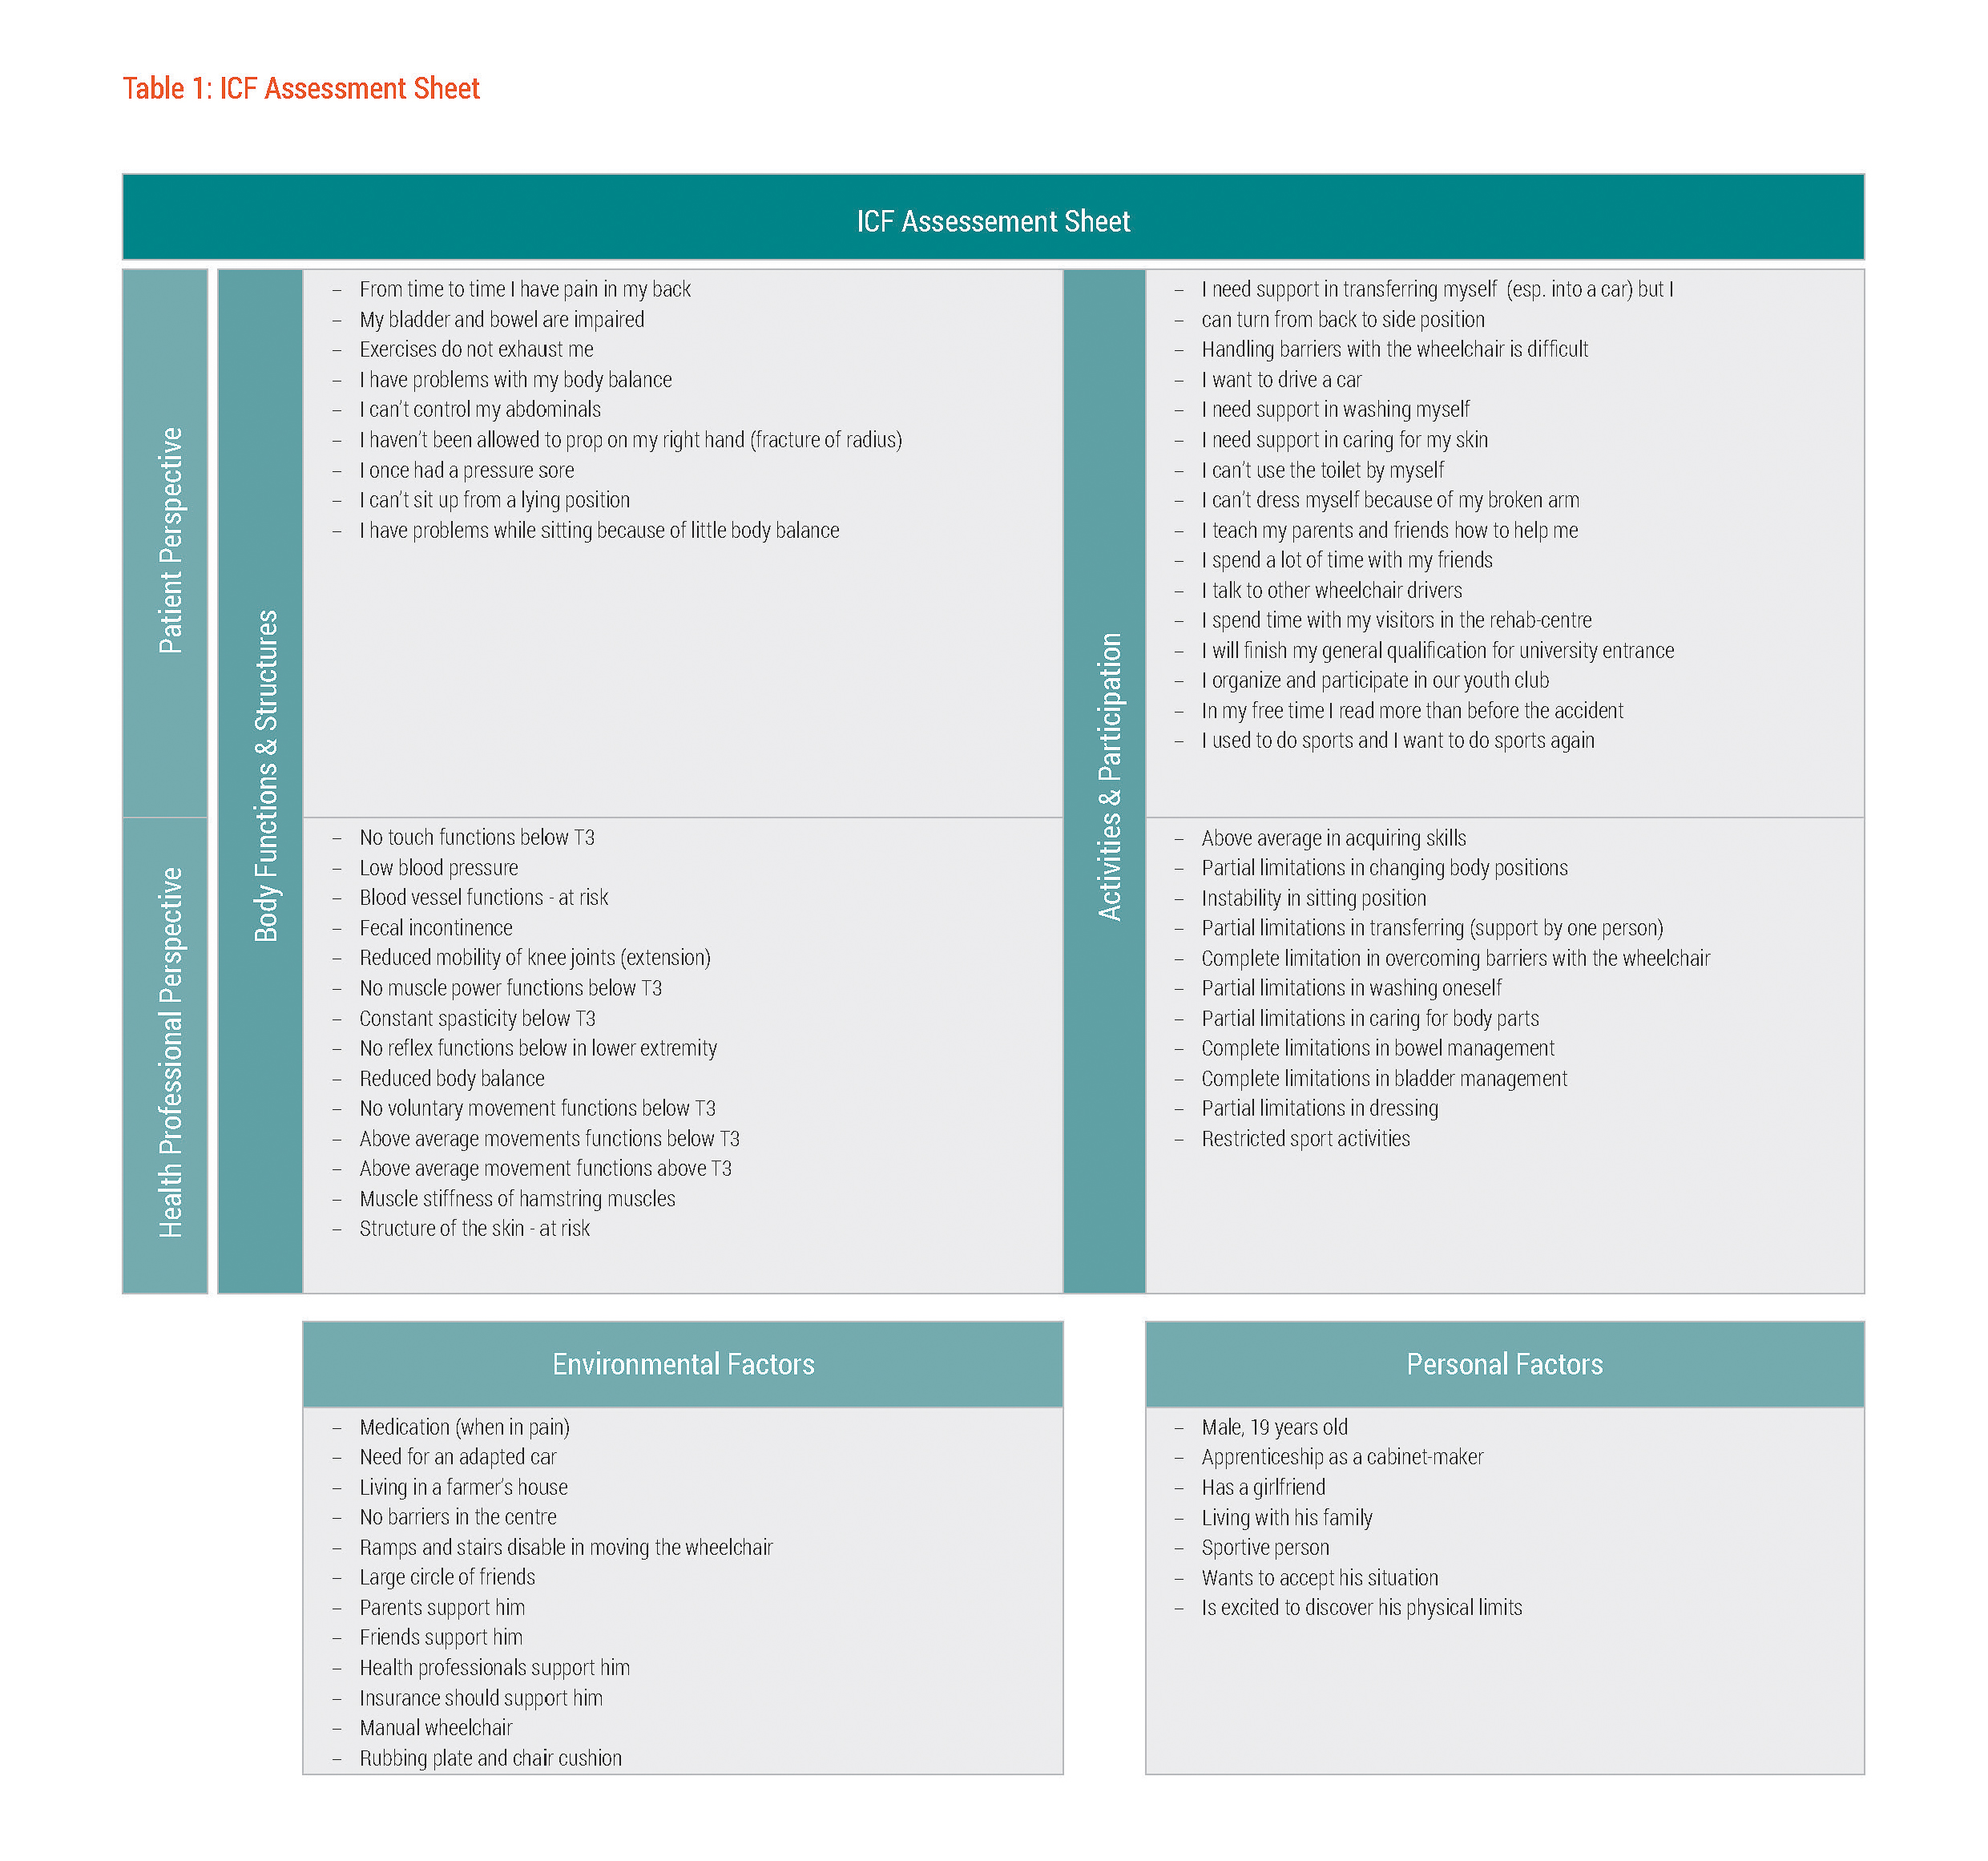 Figure 3: ICF Intervention Table